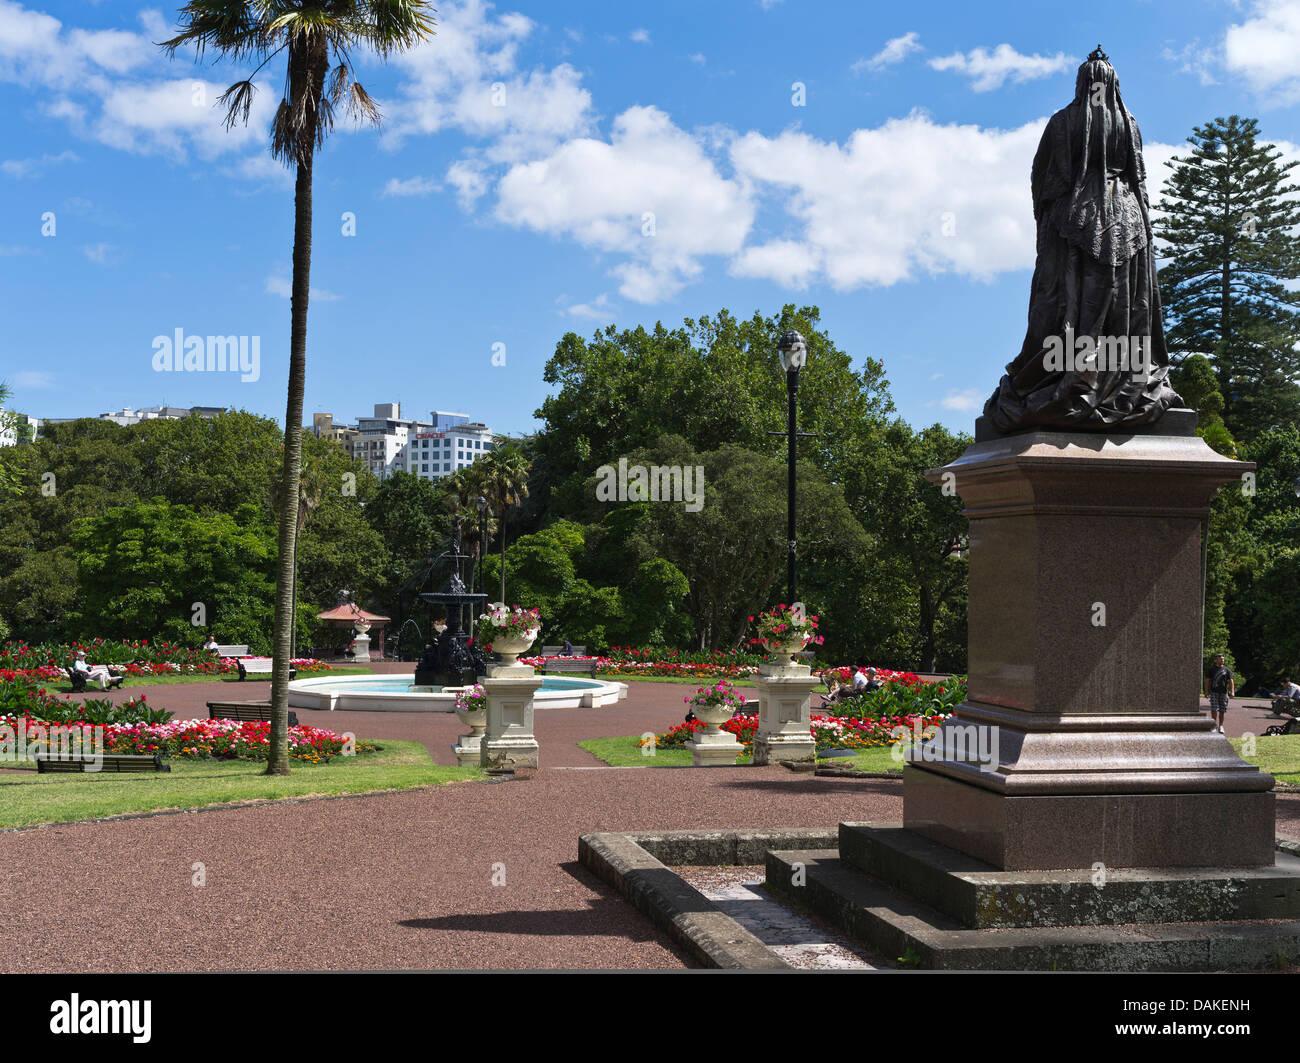 dh Albert Park AUCKLAND NEW ZEALAND Queen Victoria statue fountain pool flower garden people Stock Photo